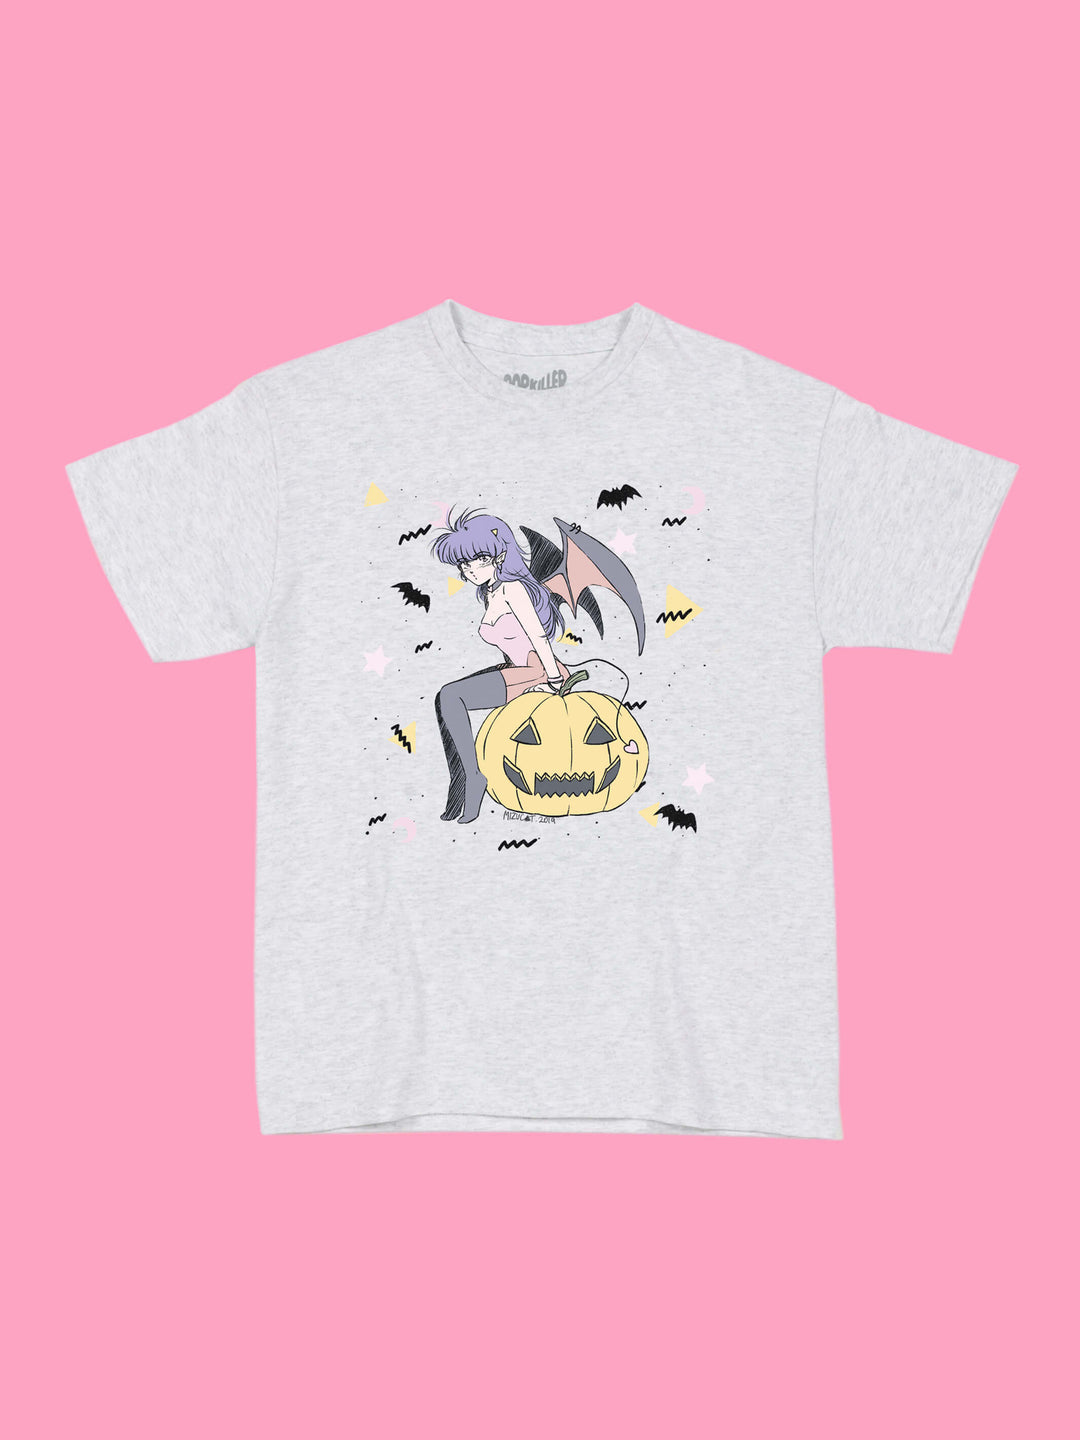 Creepy cute anime t-shirt.